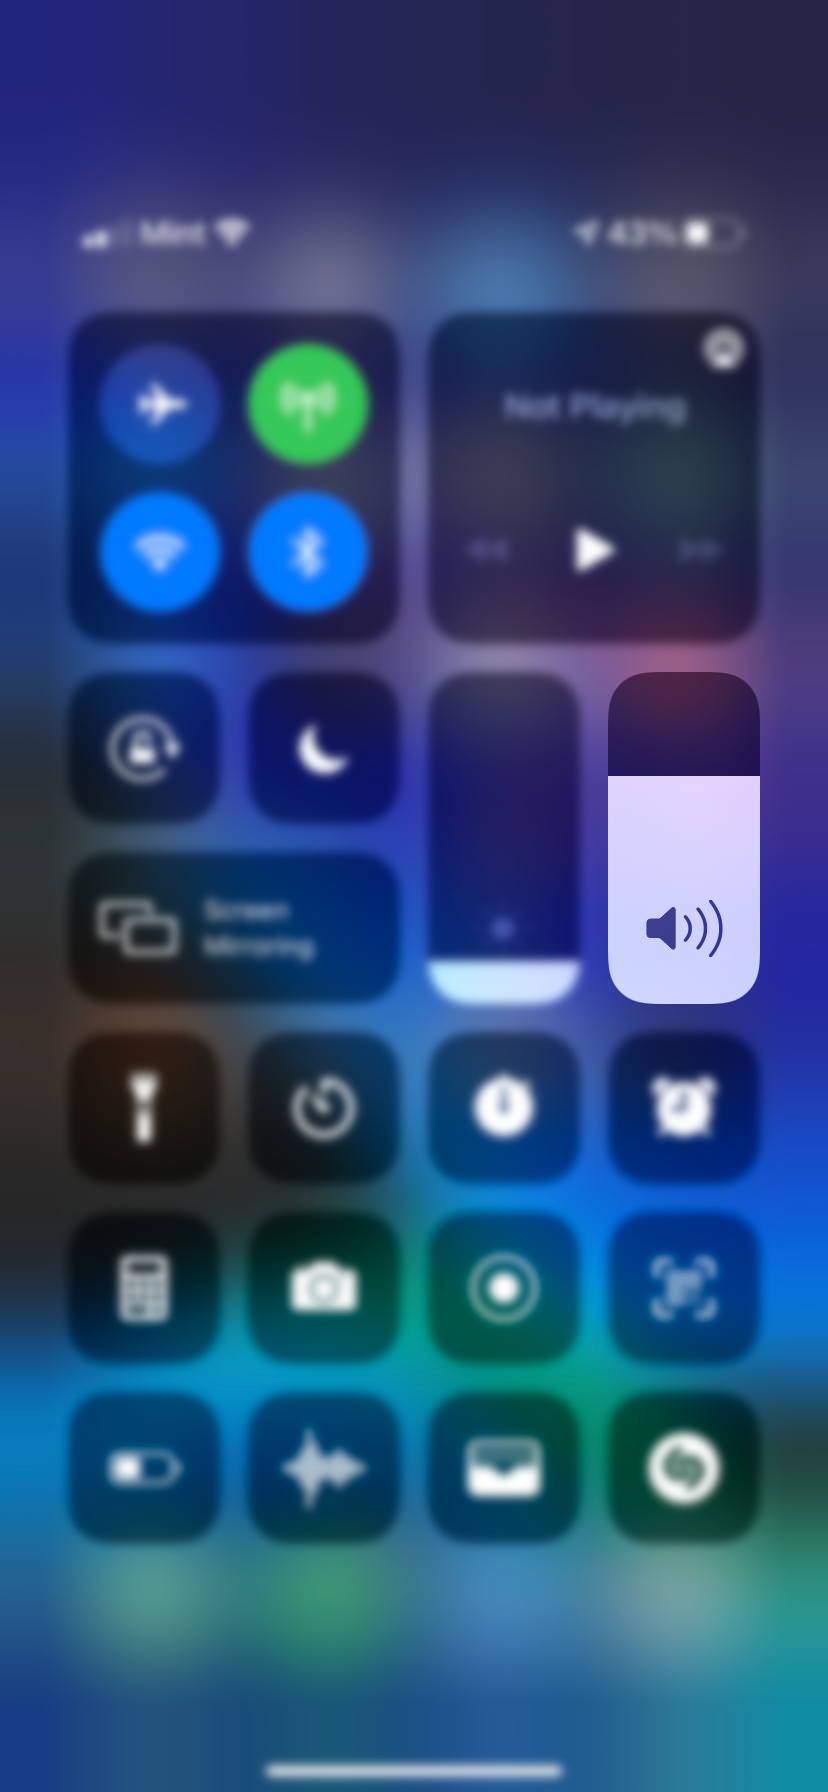 turn off shutter noise for screenshot mac